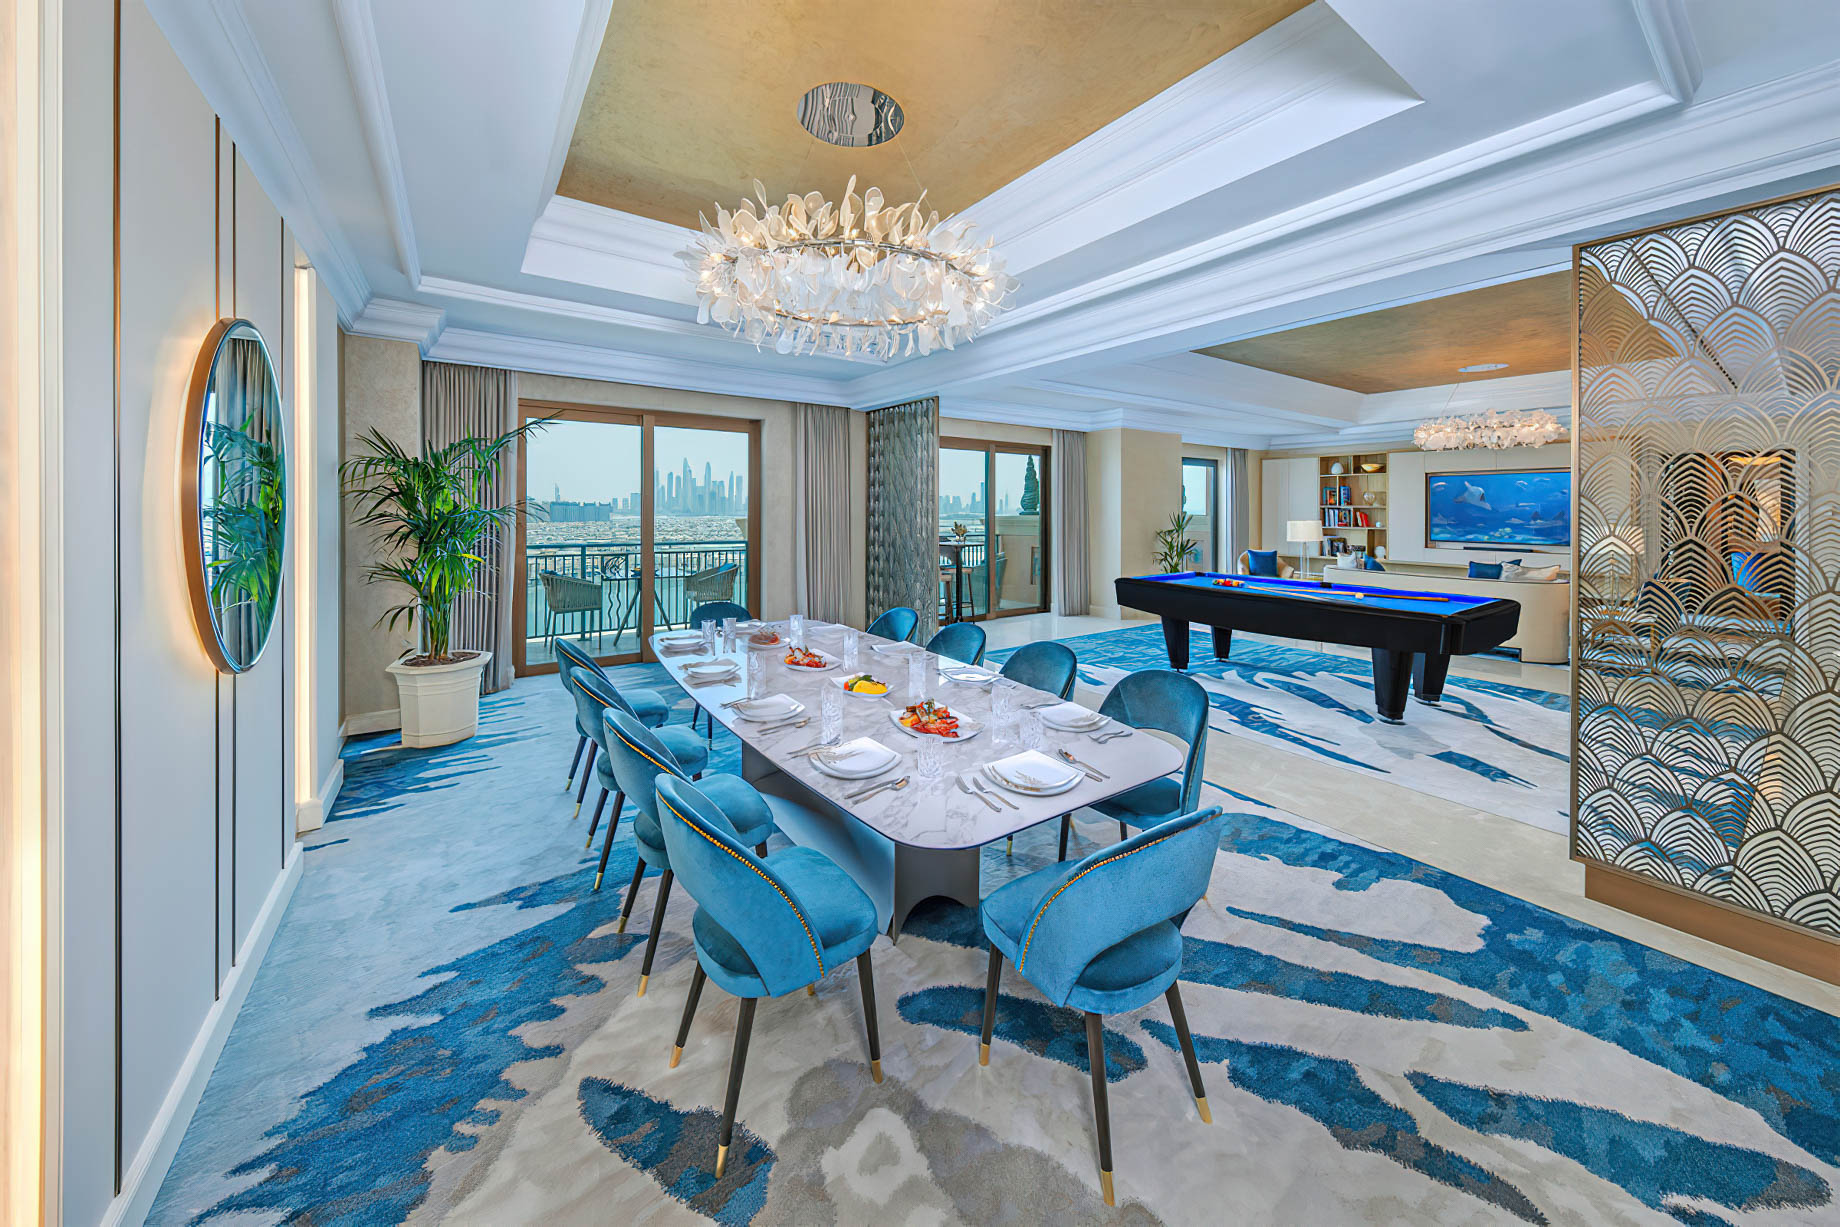 Atlantis The Palm Resort - Crescent Rd, Dubai, UAE - Presidential Suite Dining Lounge Area